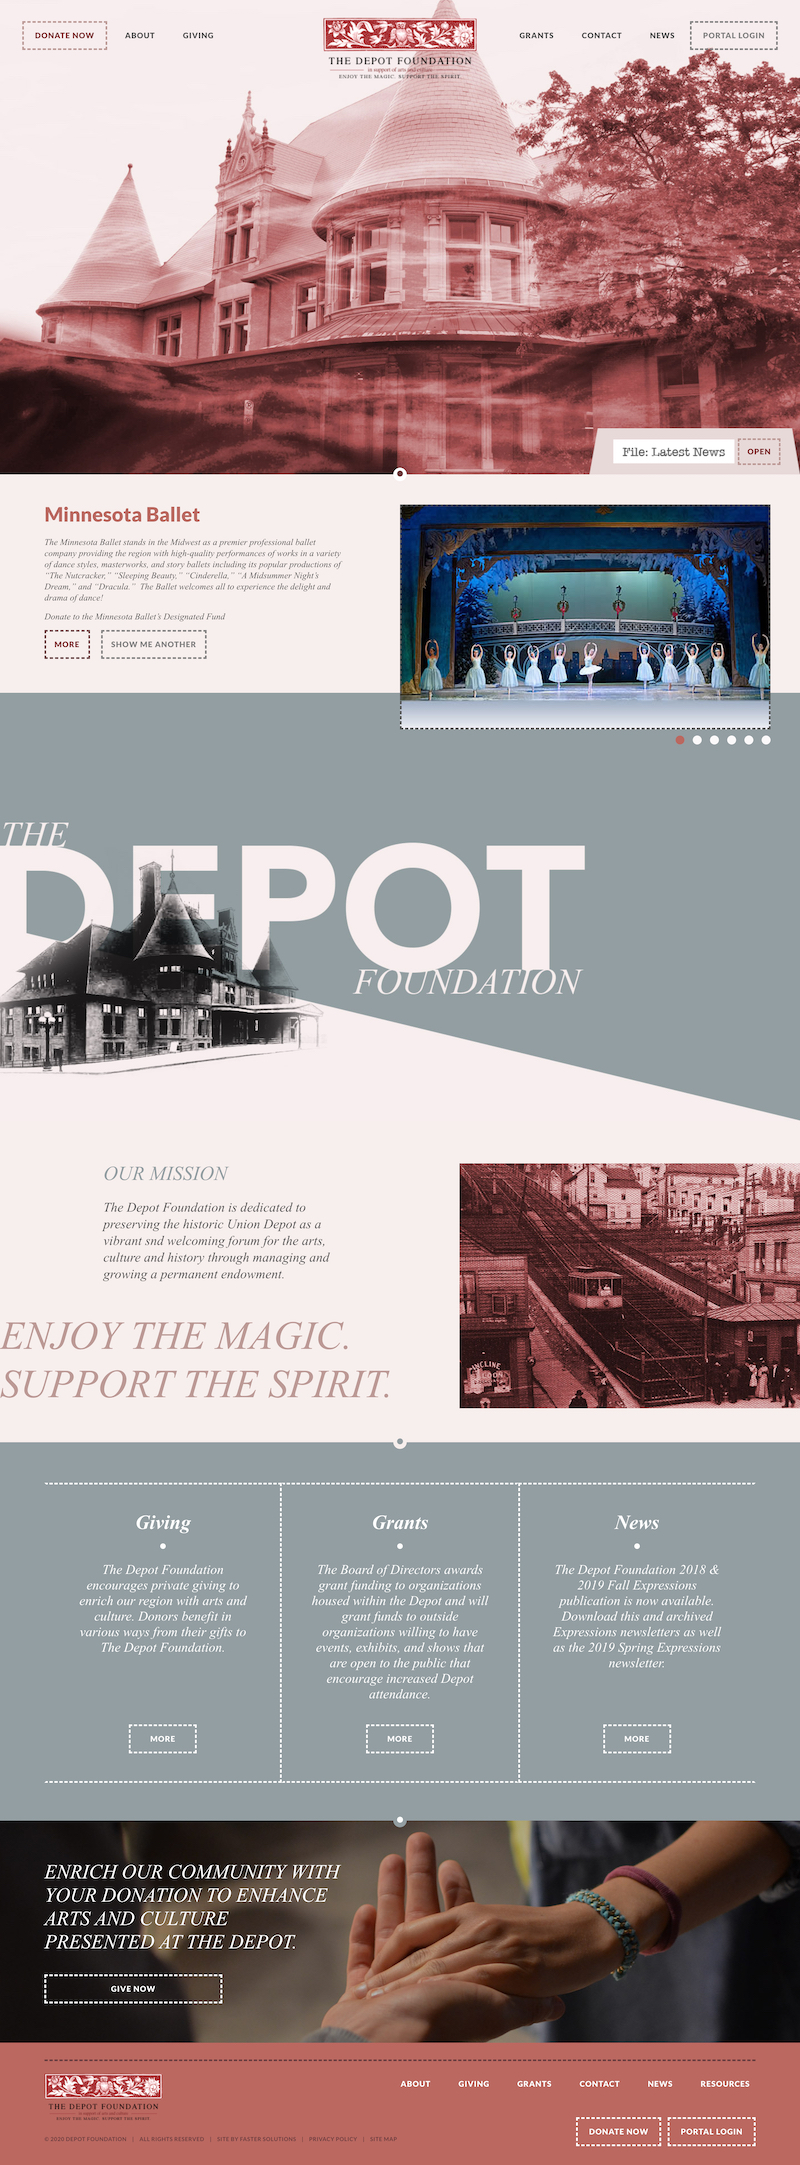 Depot Foundation - Desktop